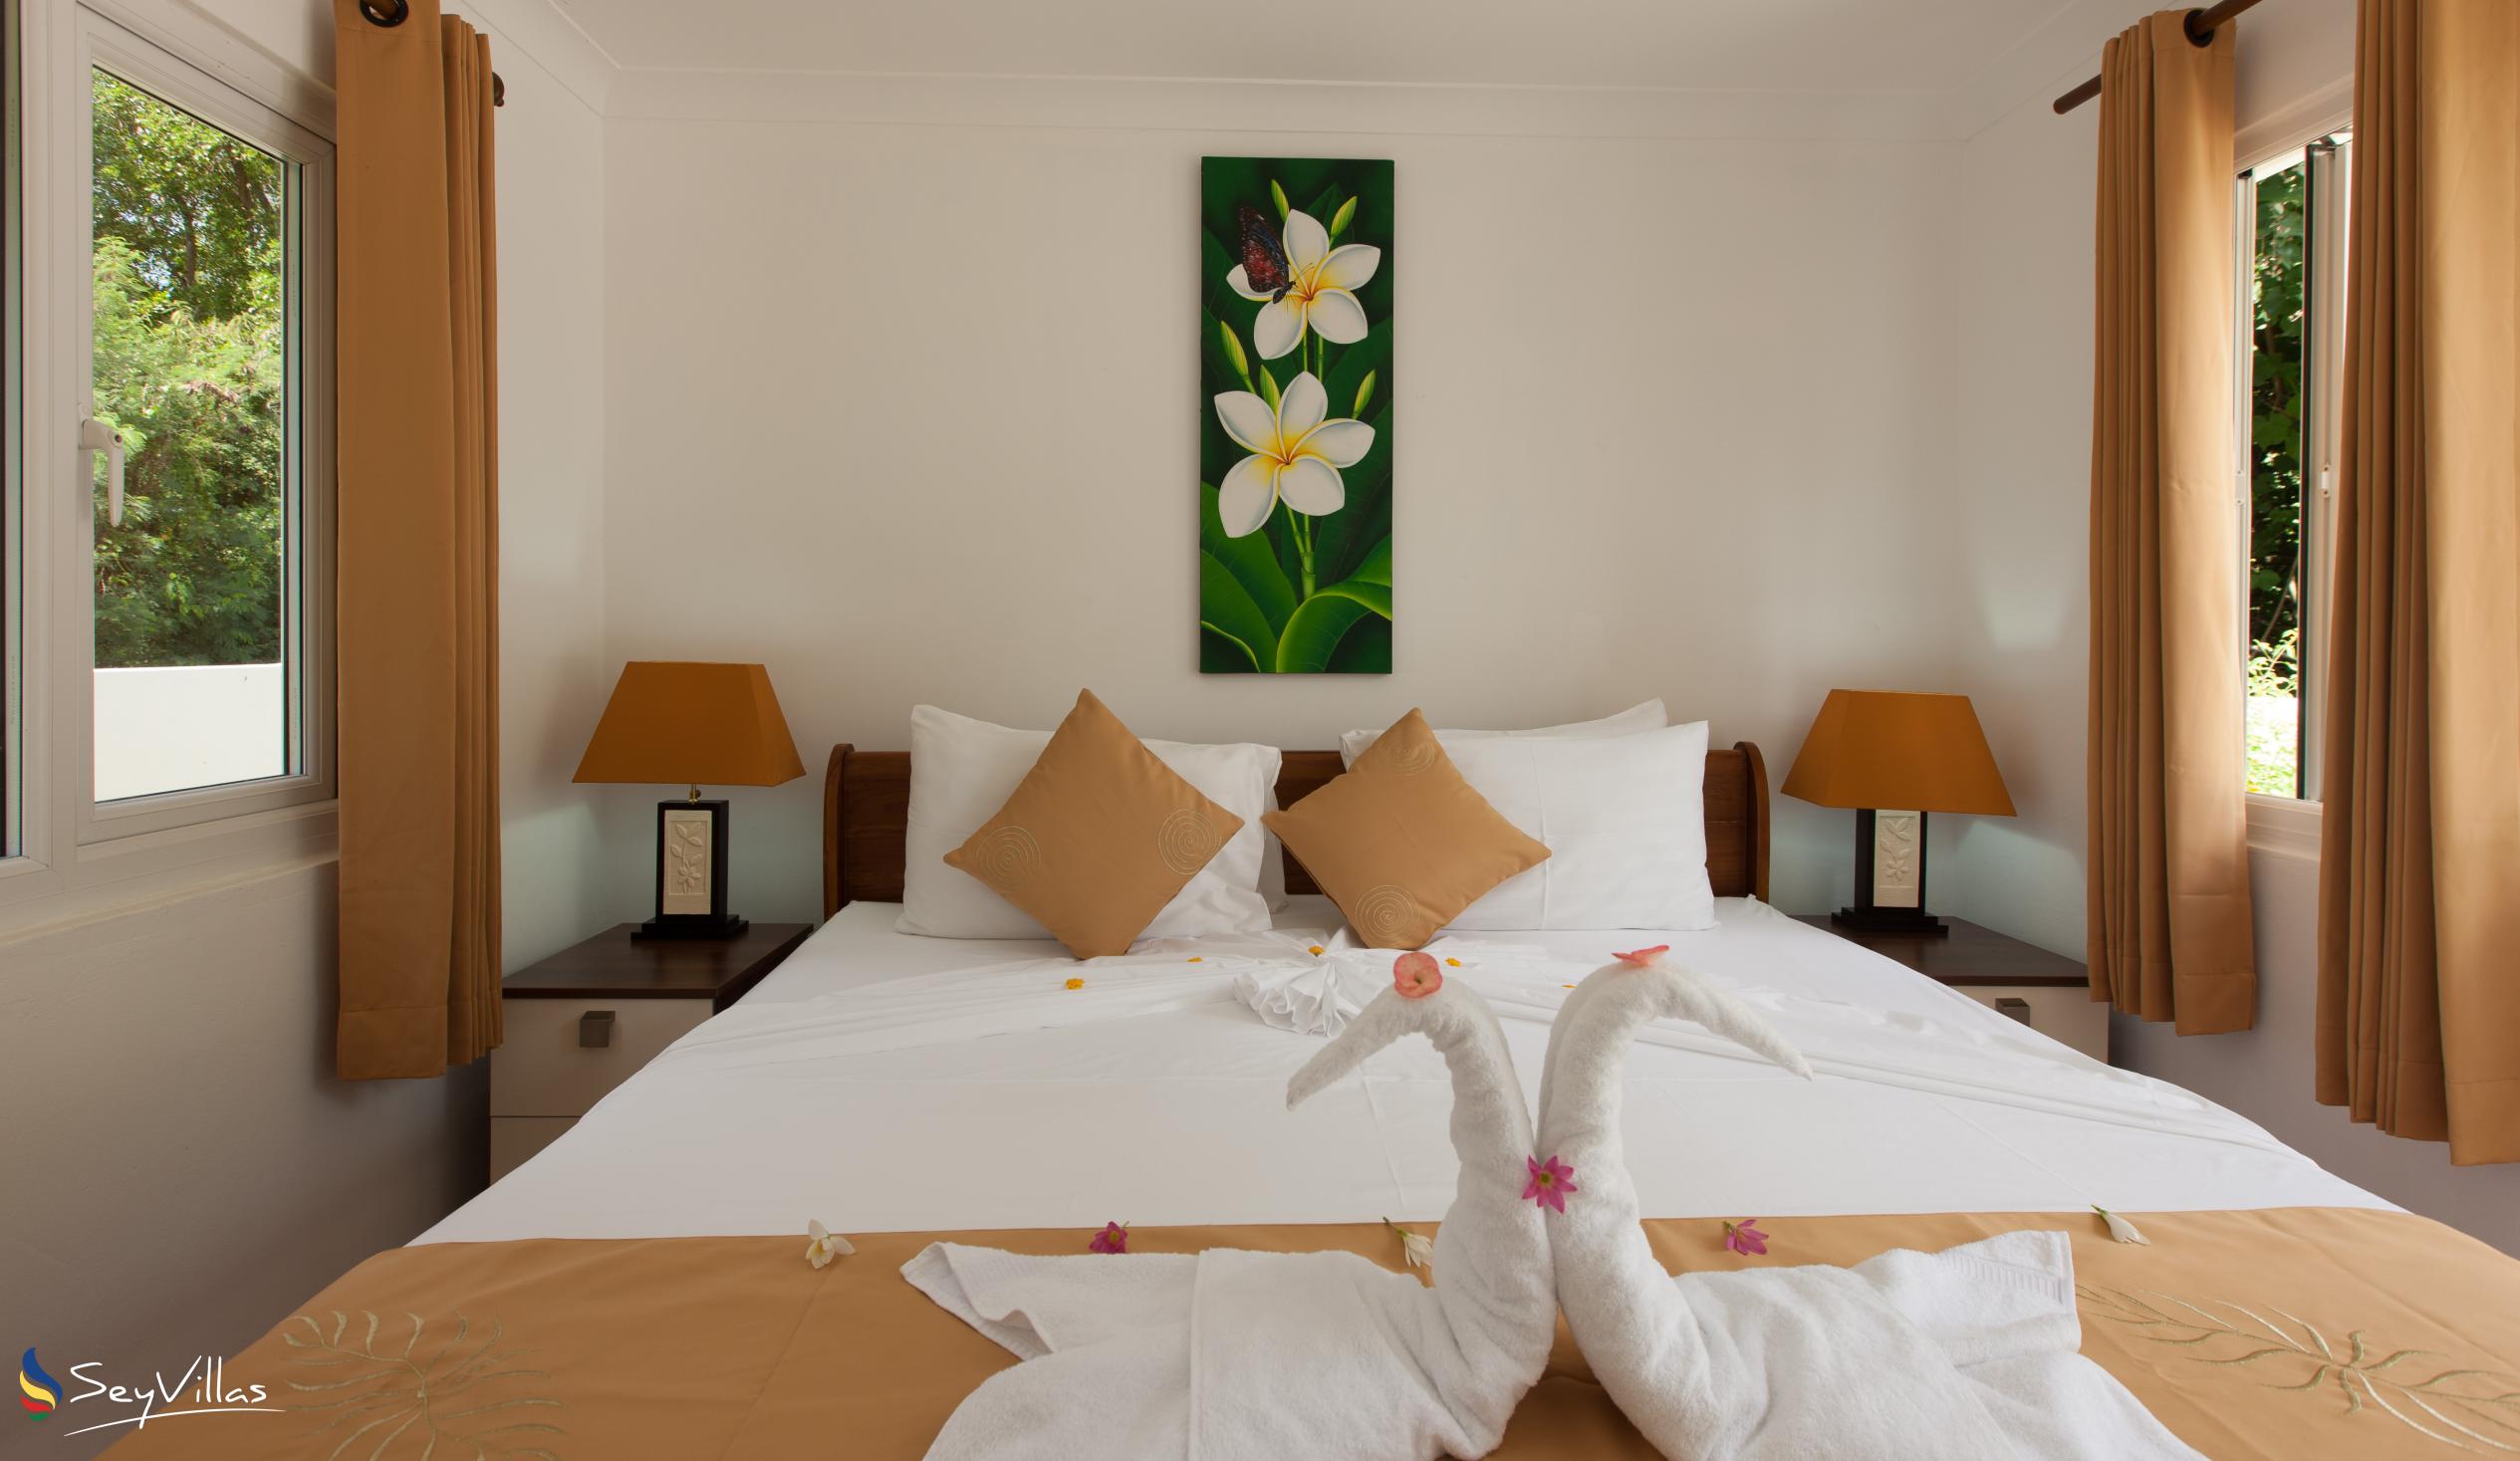 Photo 82: YASAD Luxury Beach Residence - 1-Bedroom Studio - Praslin (Seychelles)